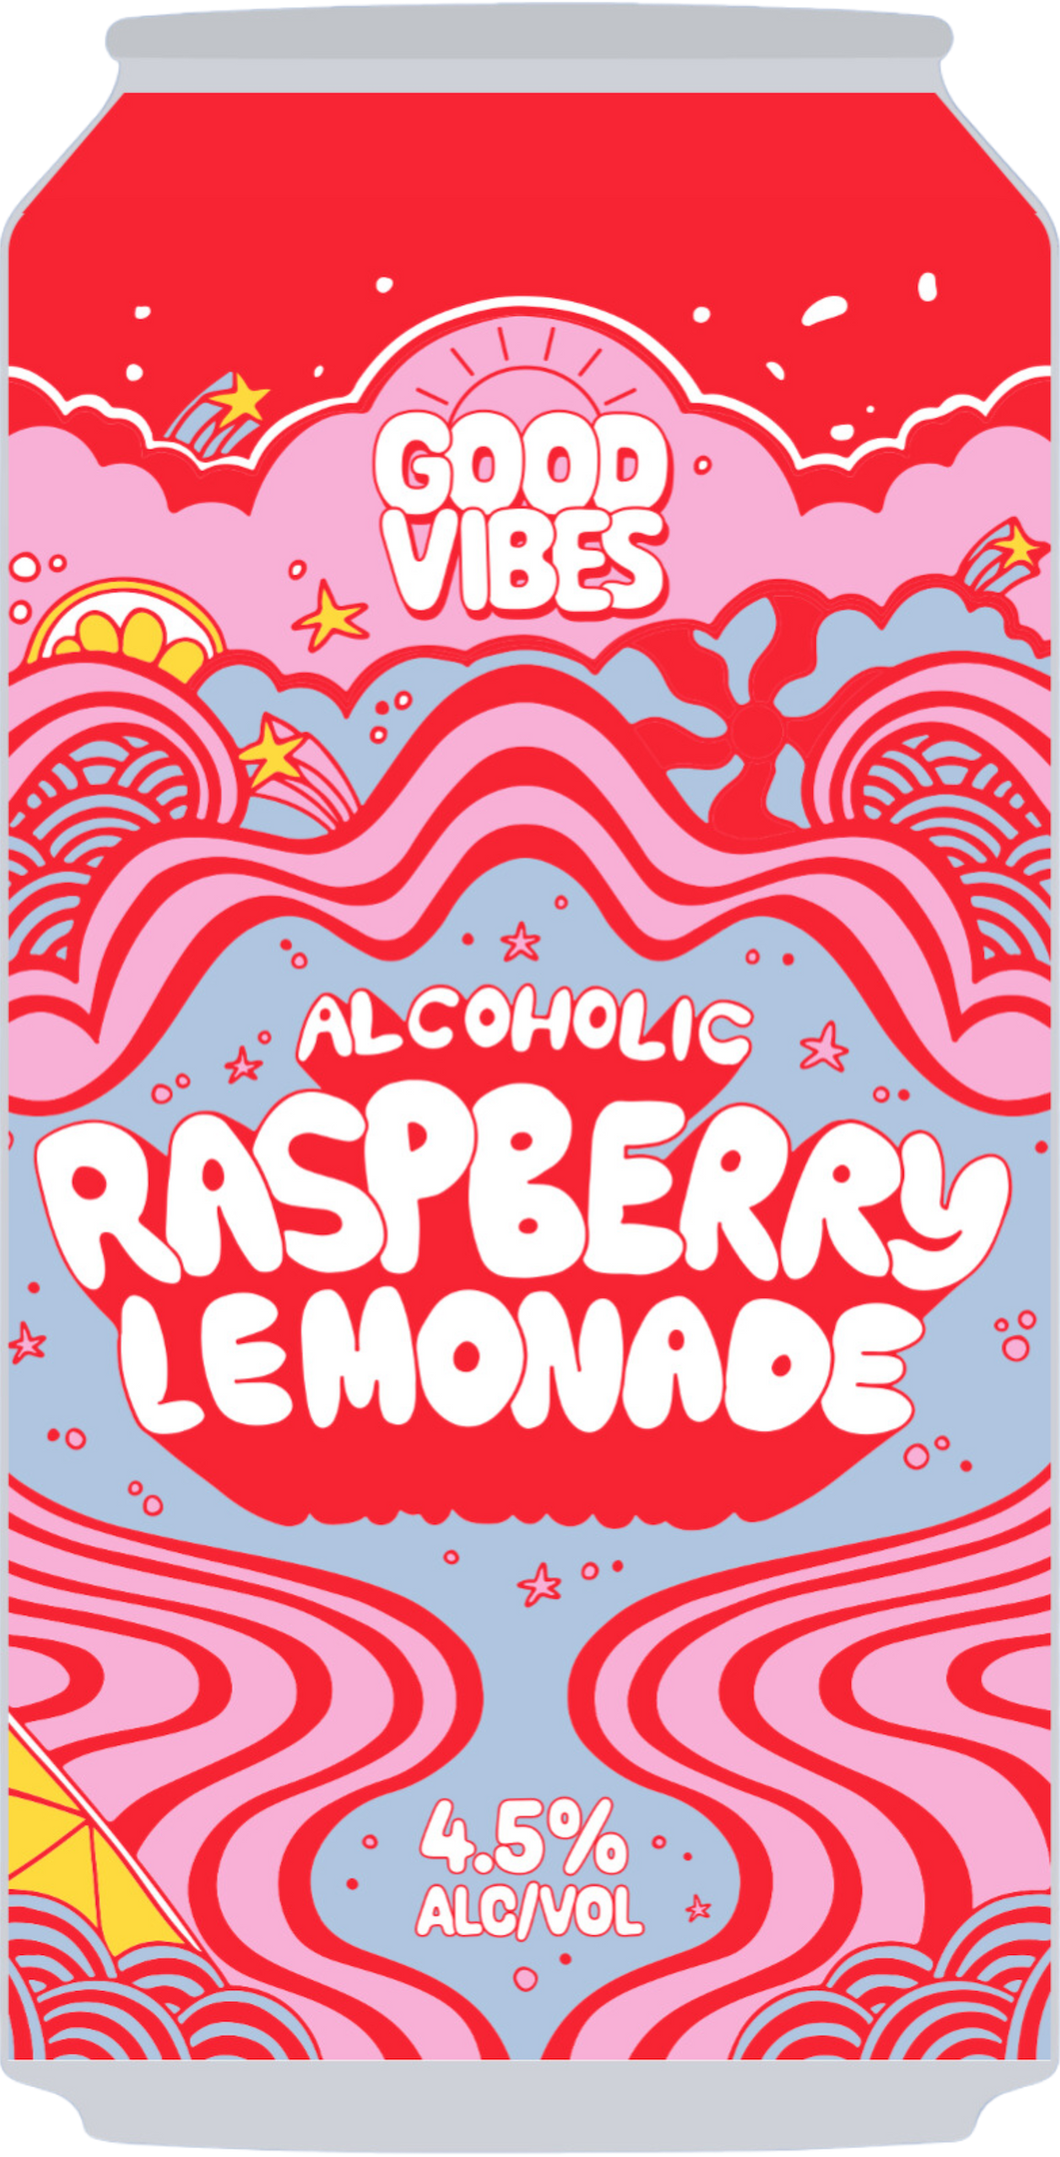 Good Vibes - Hard Raspberry Lemonade   - 375ml Can - 4.5% - Case Promo.